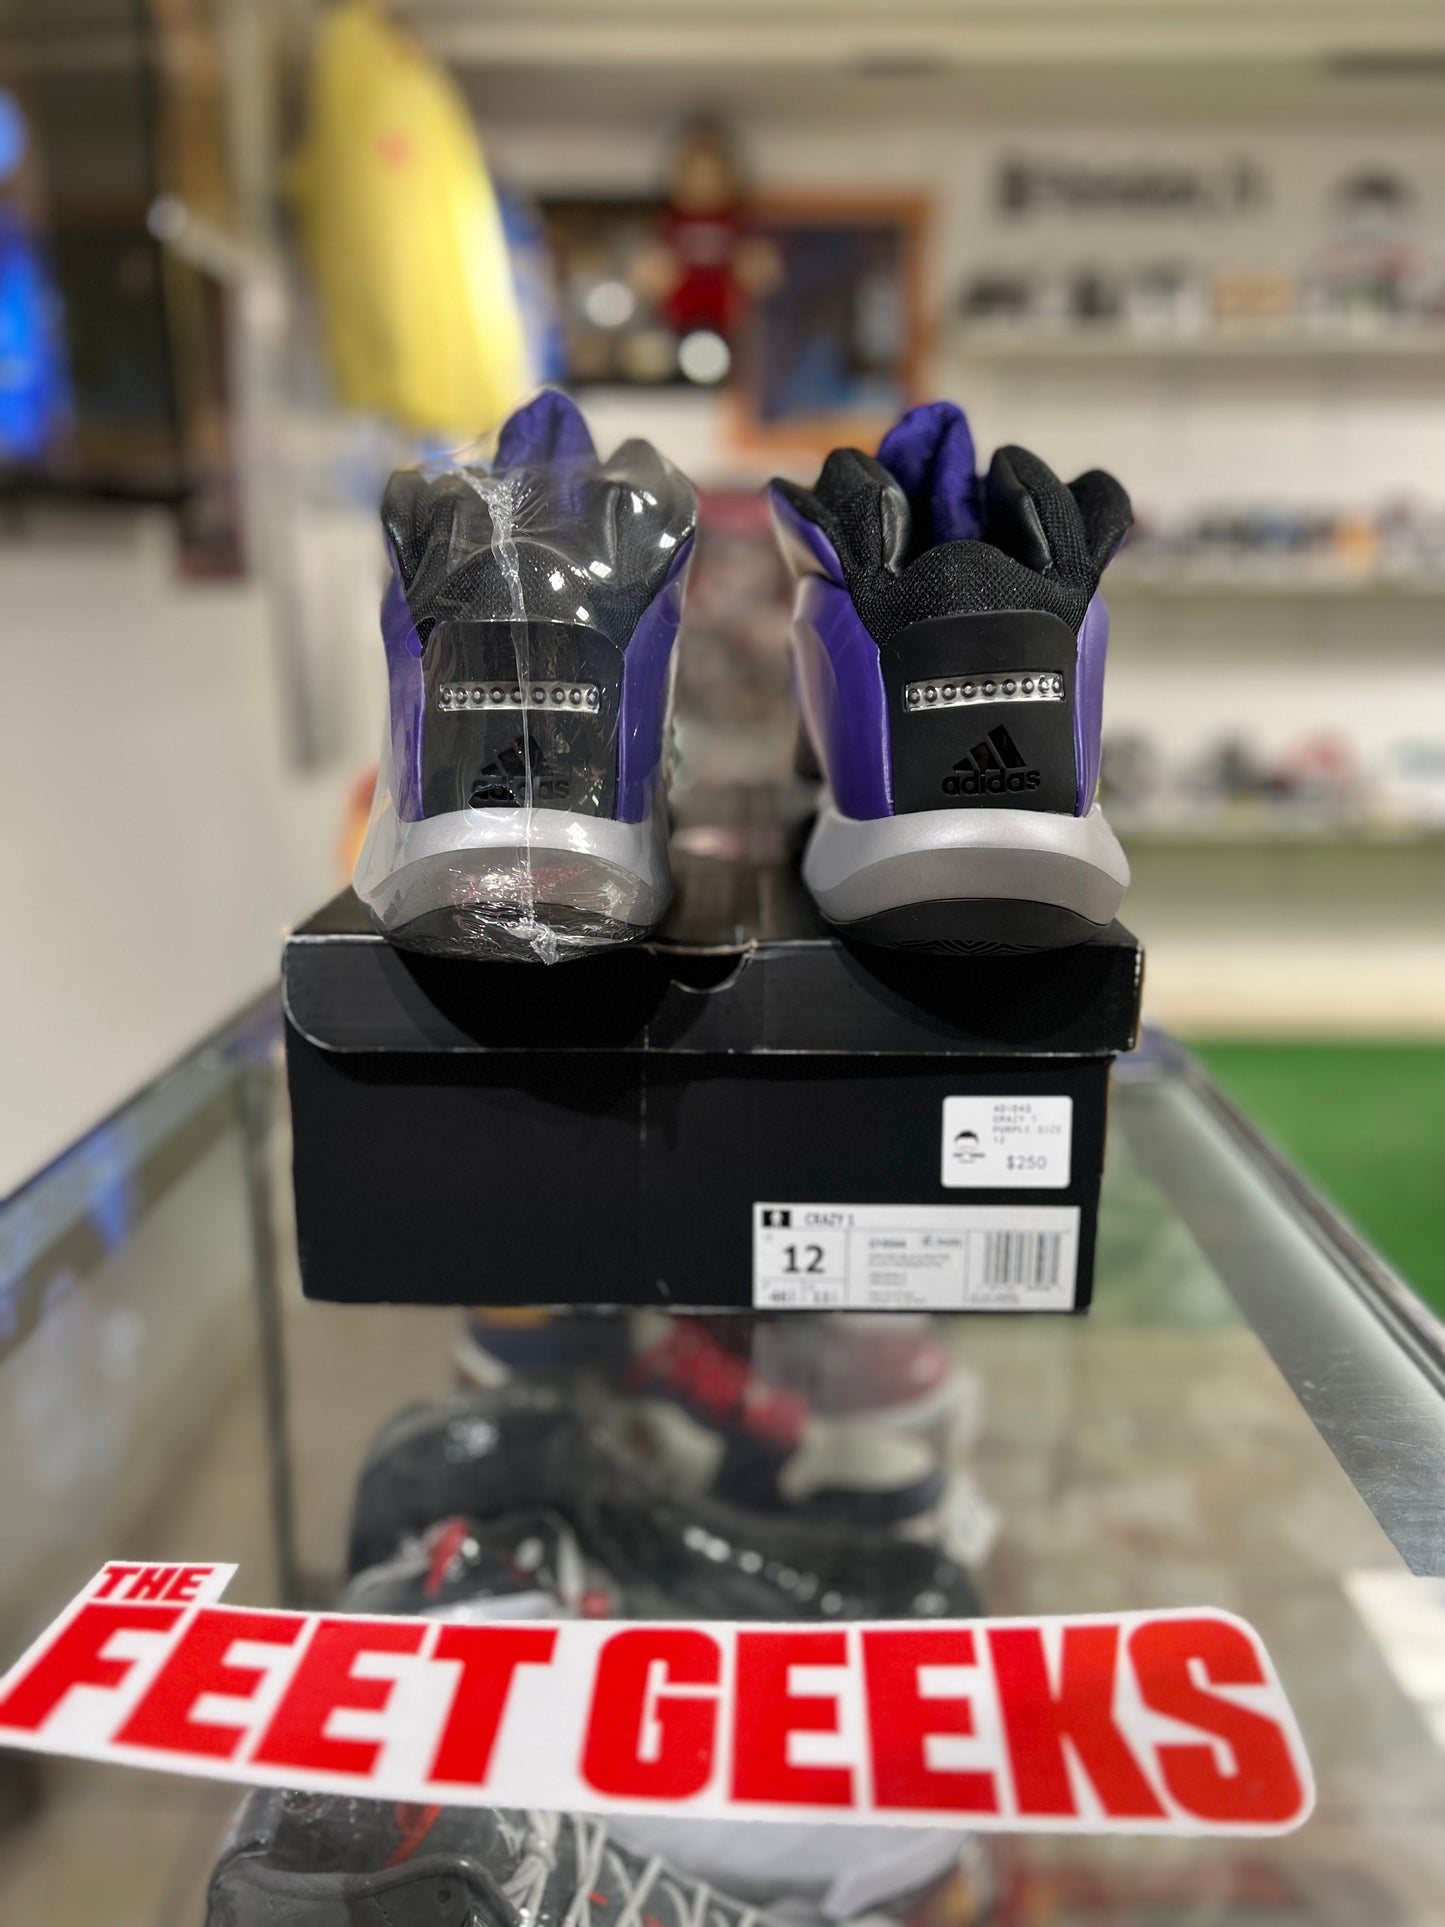 Adidas crazy 1 purple men’s shoe new